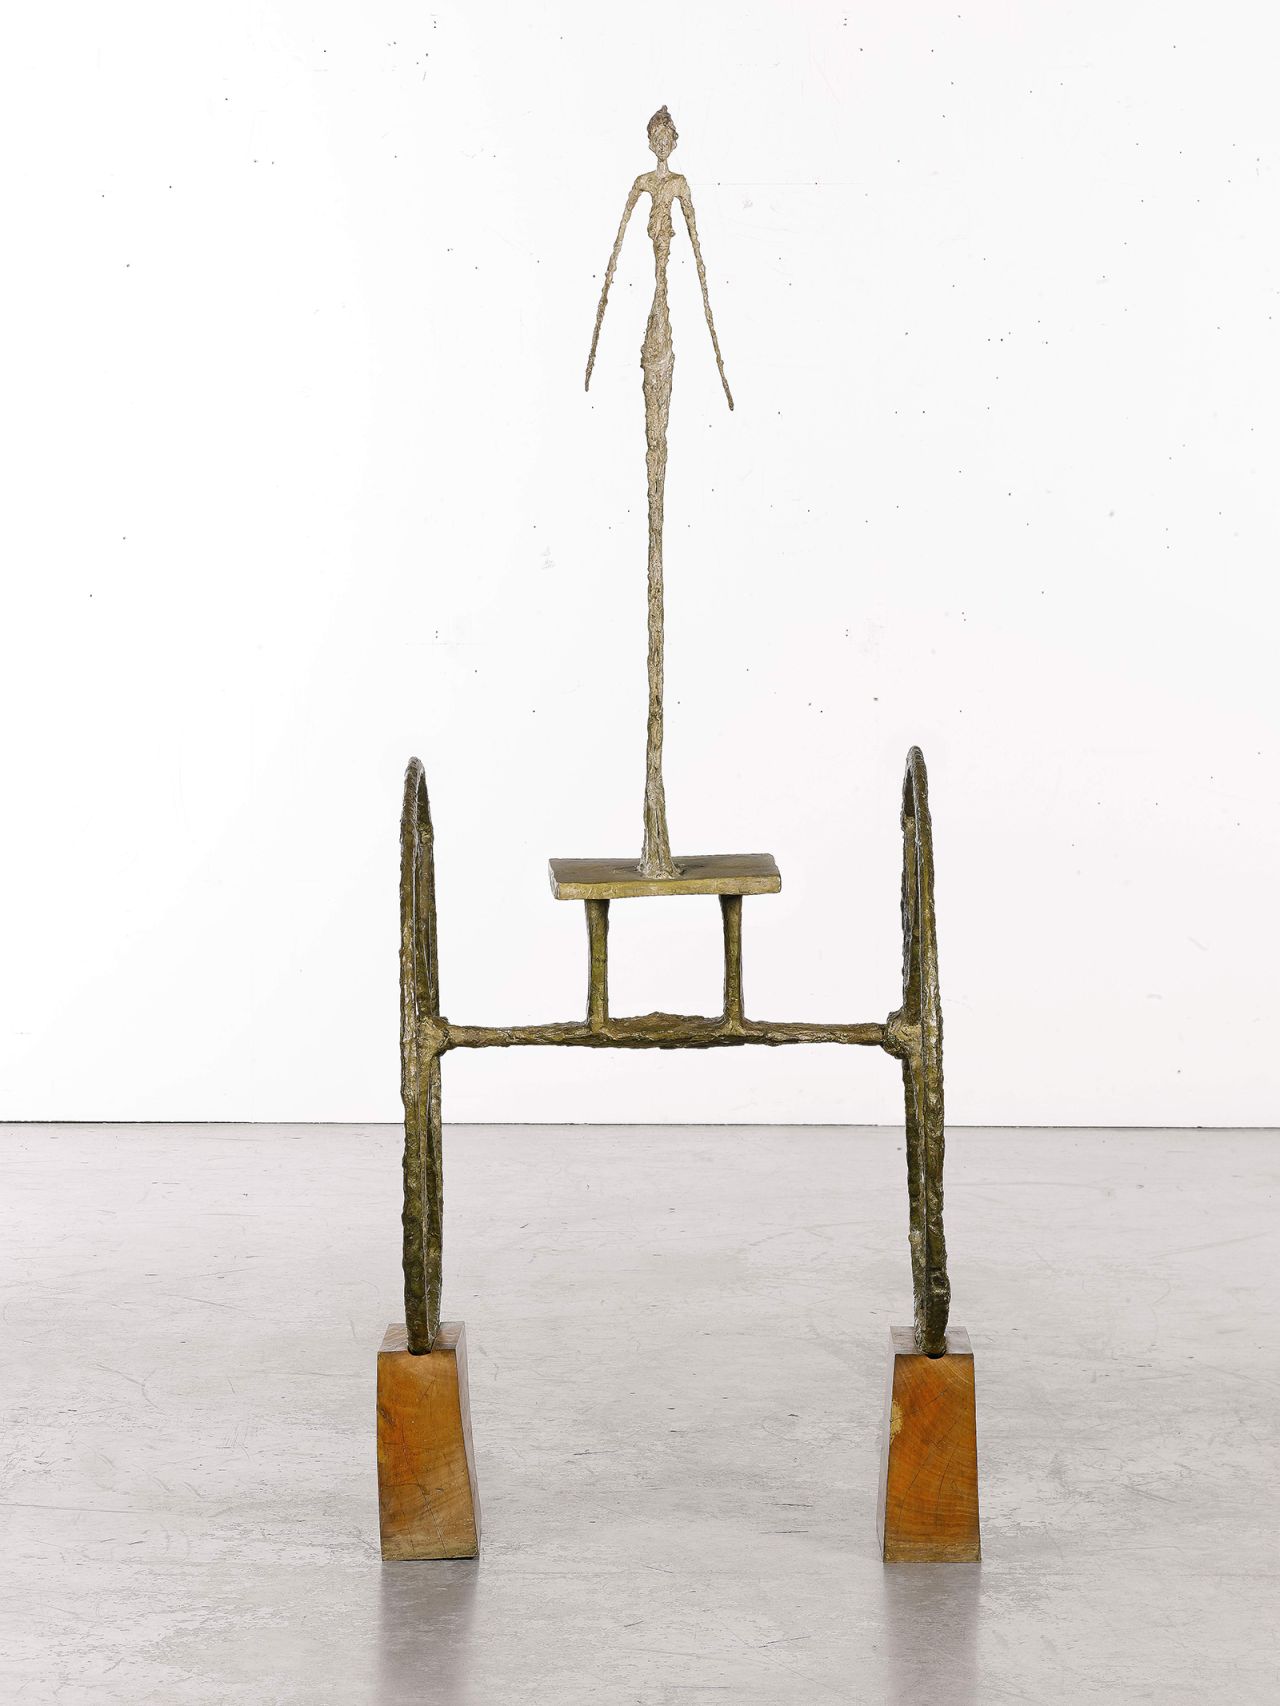 "Chariot" (1950) by Alberto Giacometti